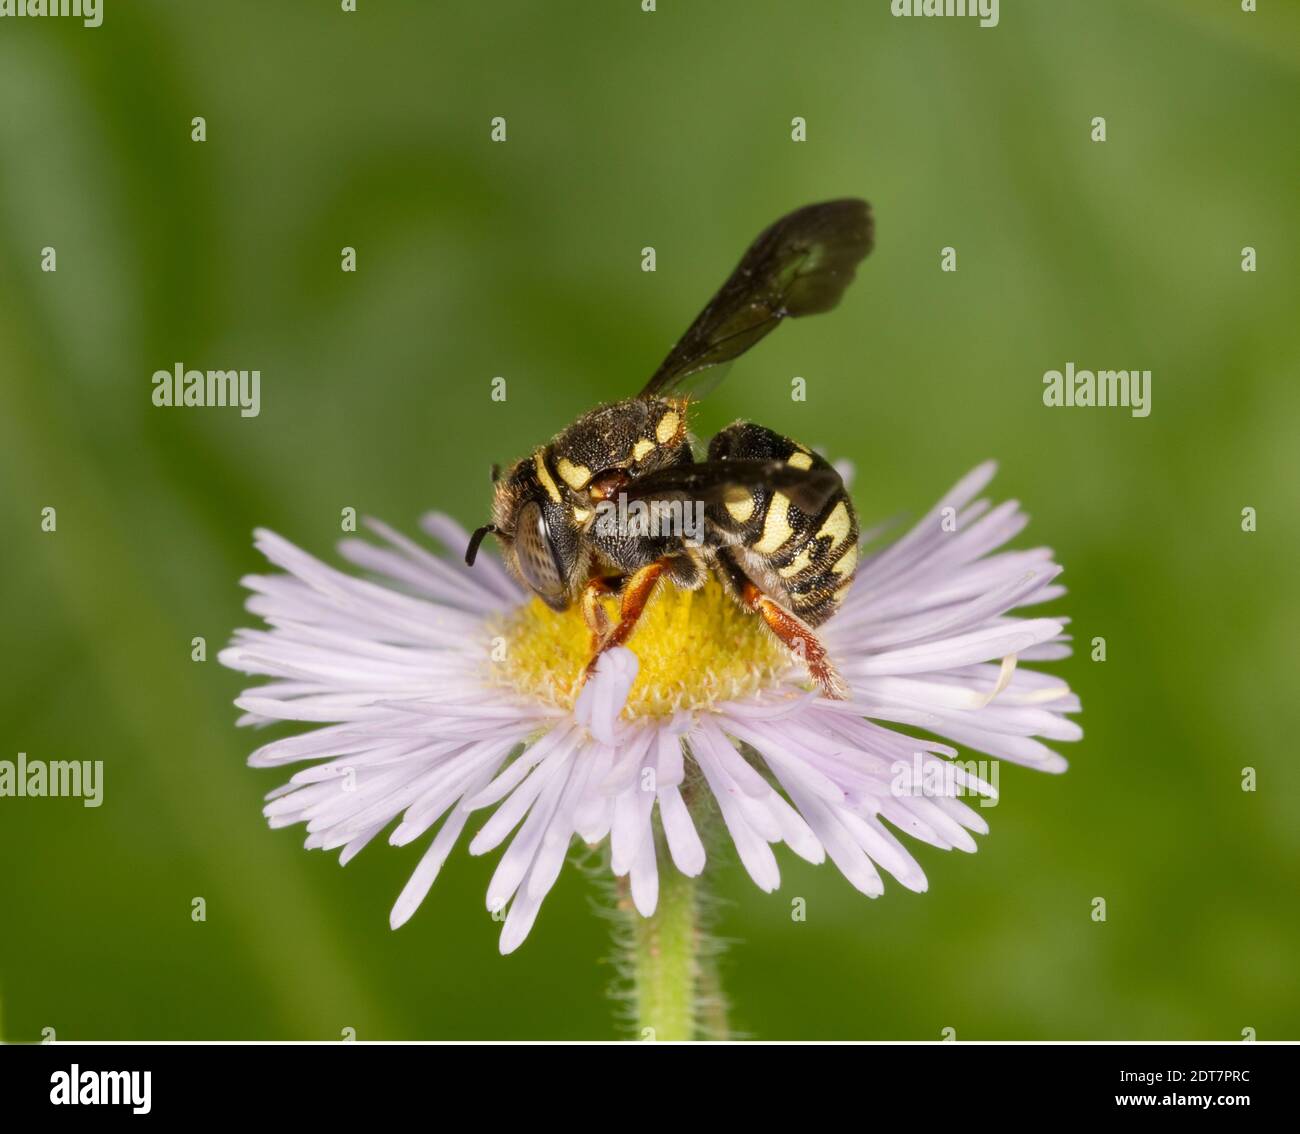 Northern Rotund-Resin Bee female, Anthidiellum notatum, Megachilidae. Body Length 7 mm. Photographed on Erigeron sp., Asteraceae. Stock Photo